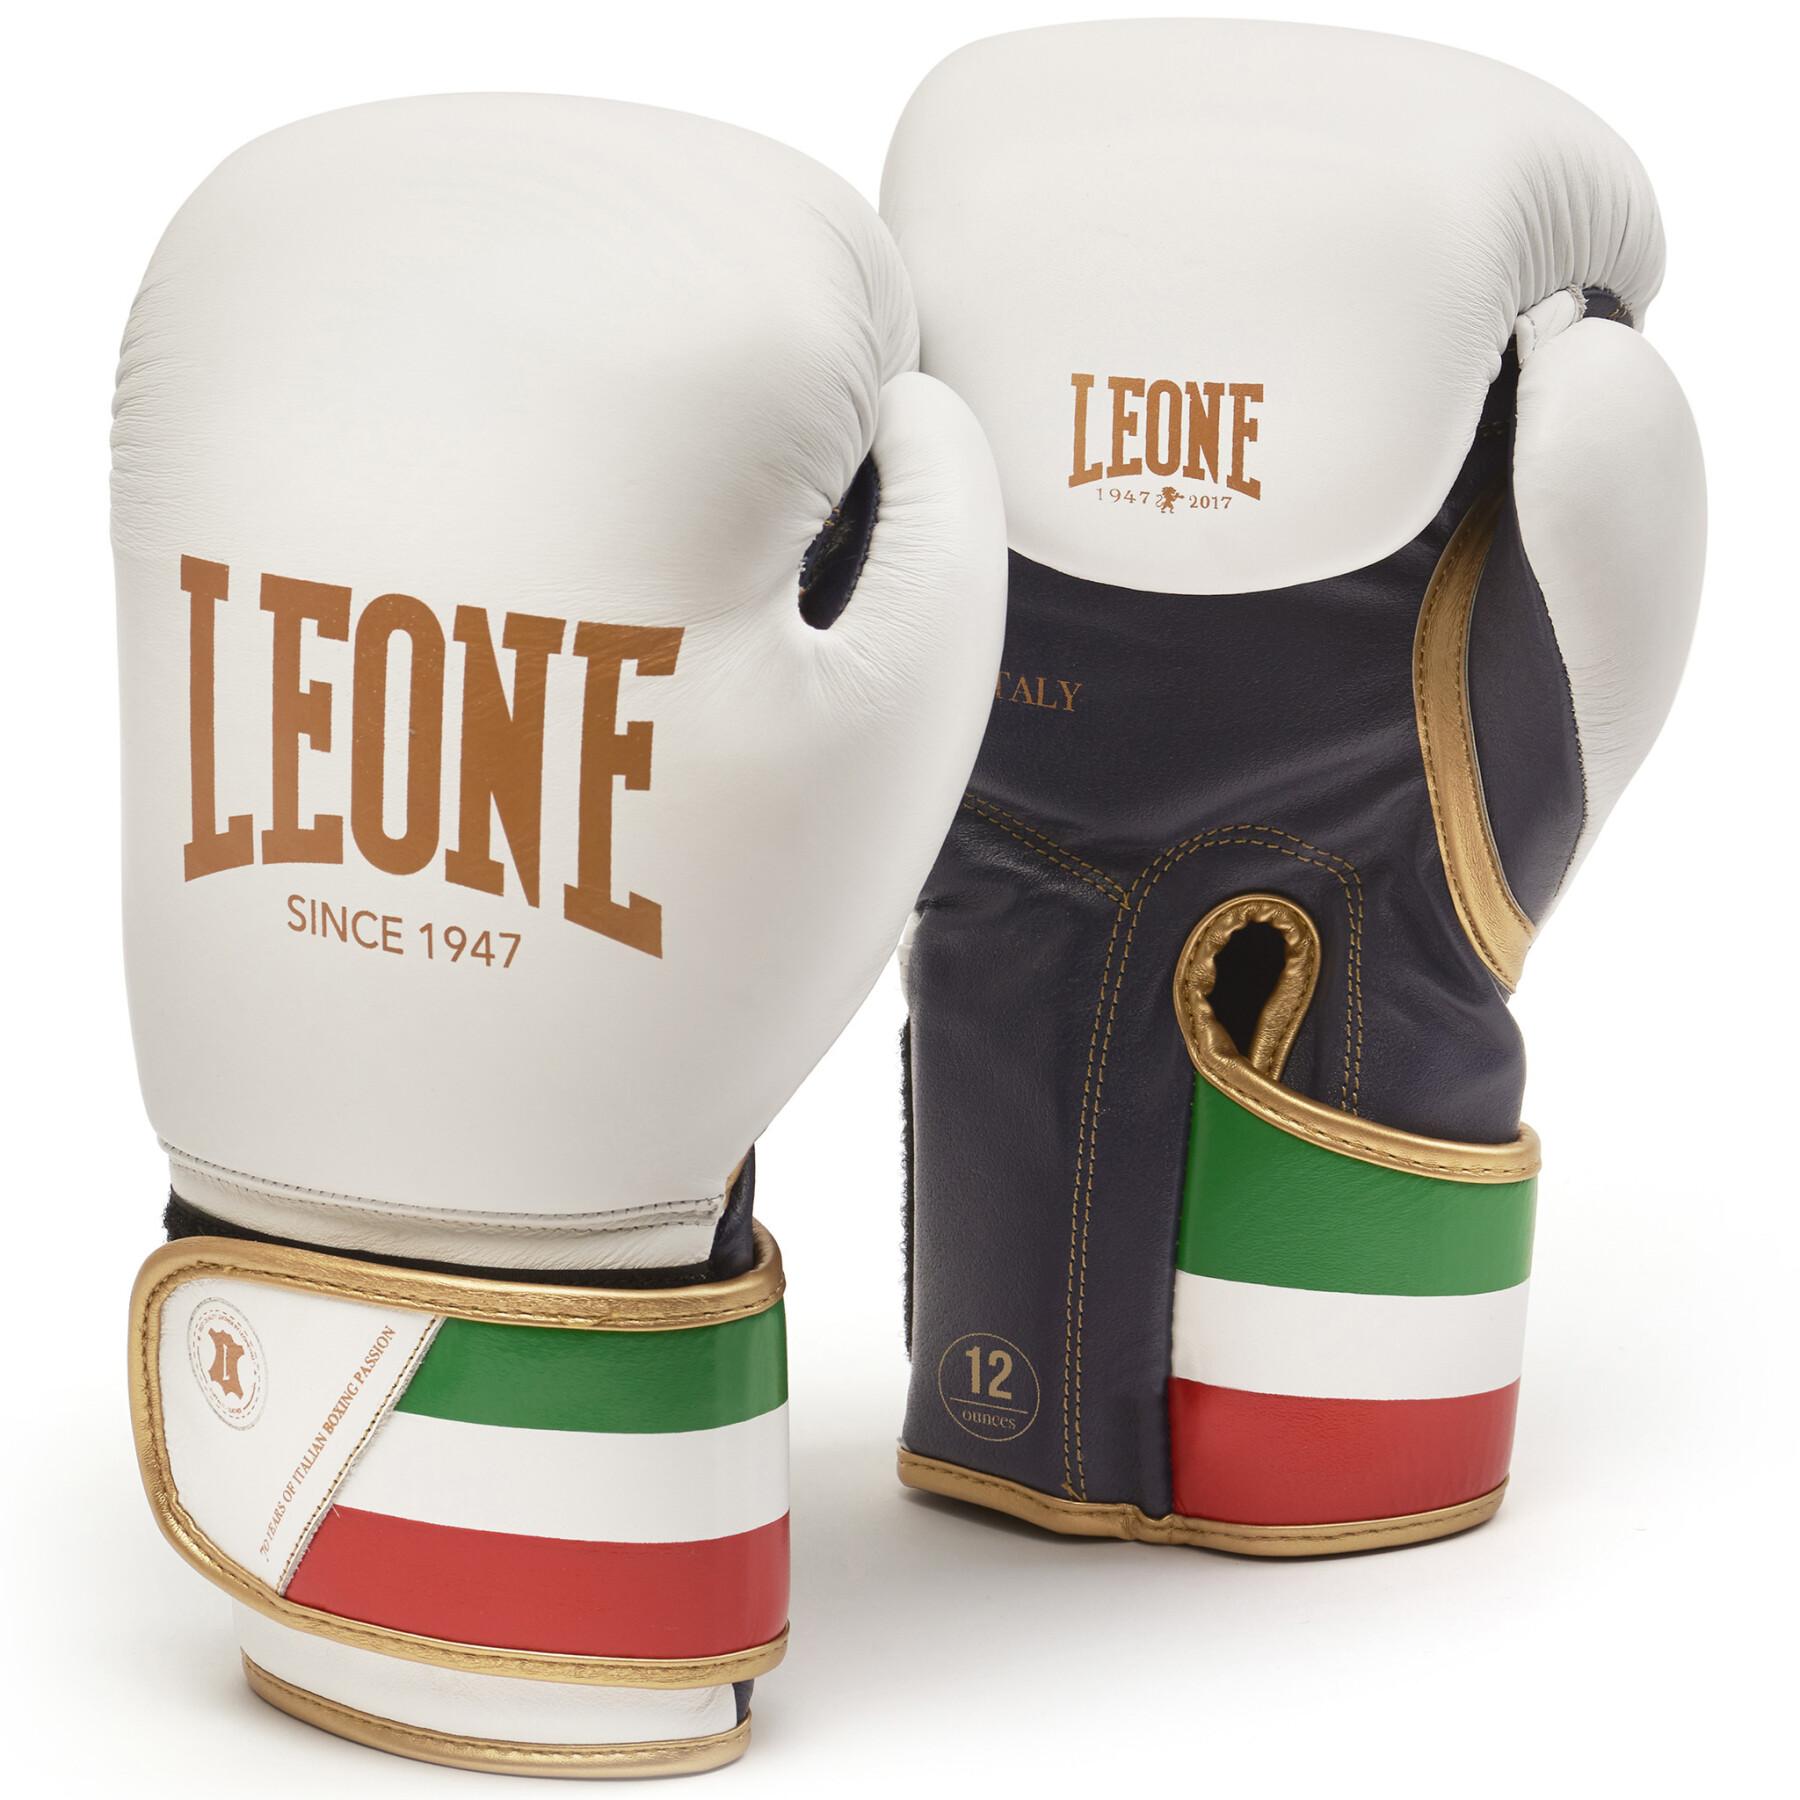 Boxing gloves Leone Italy 14 oz